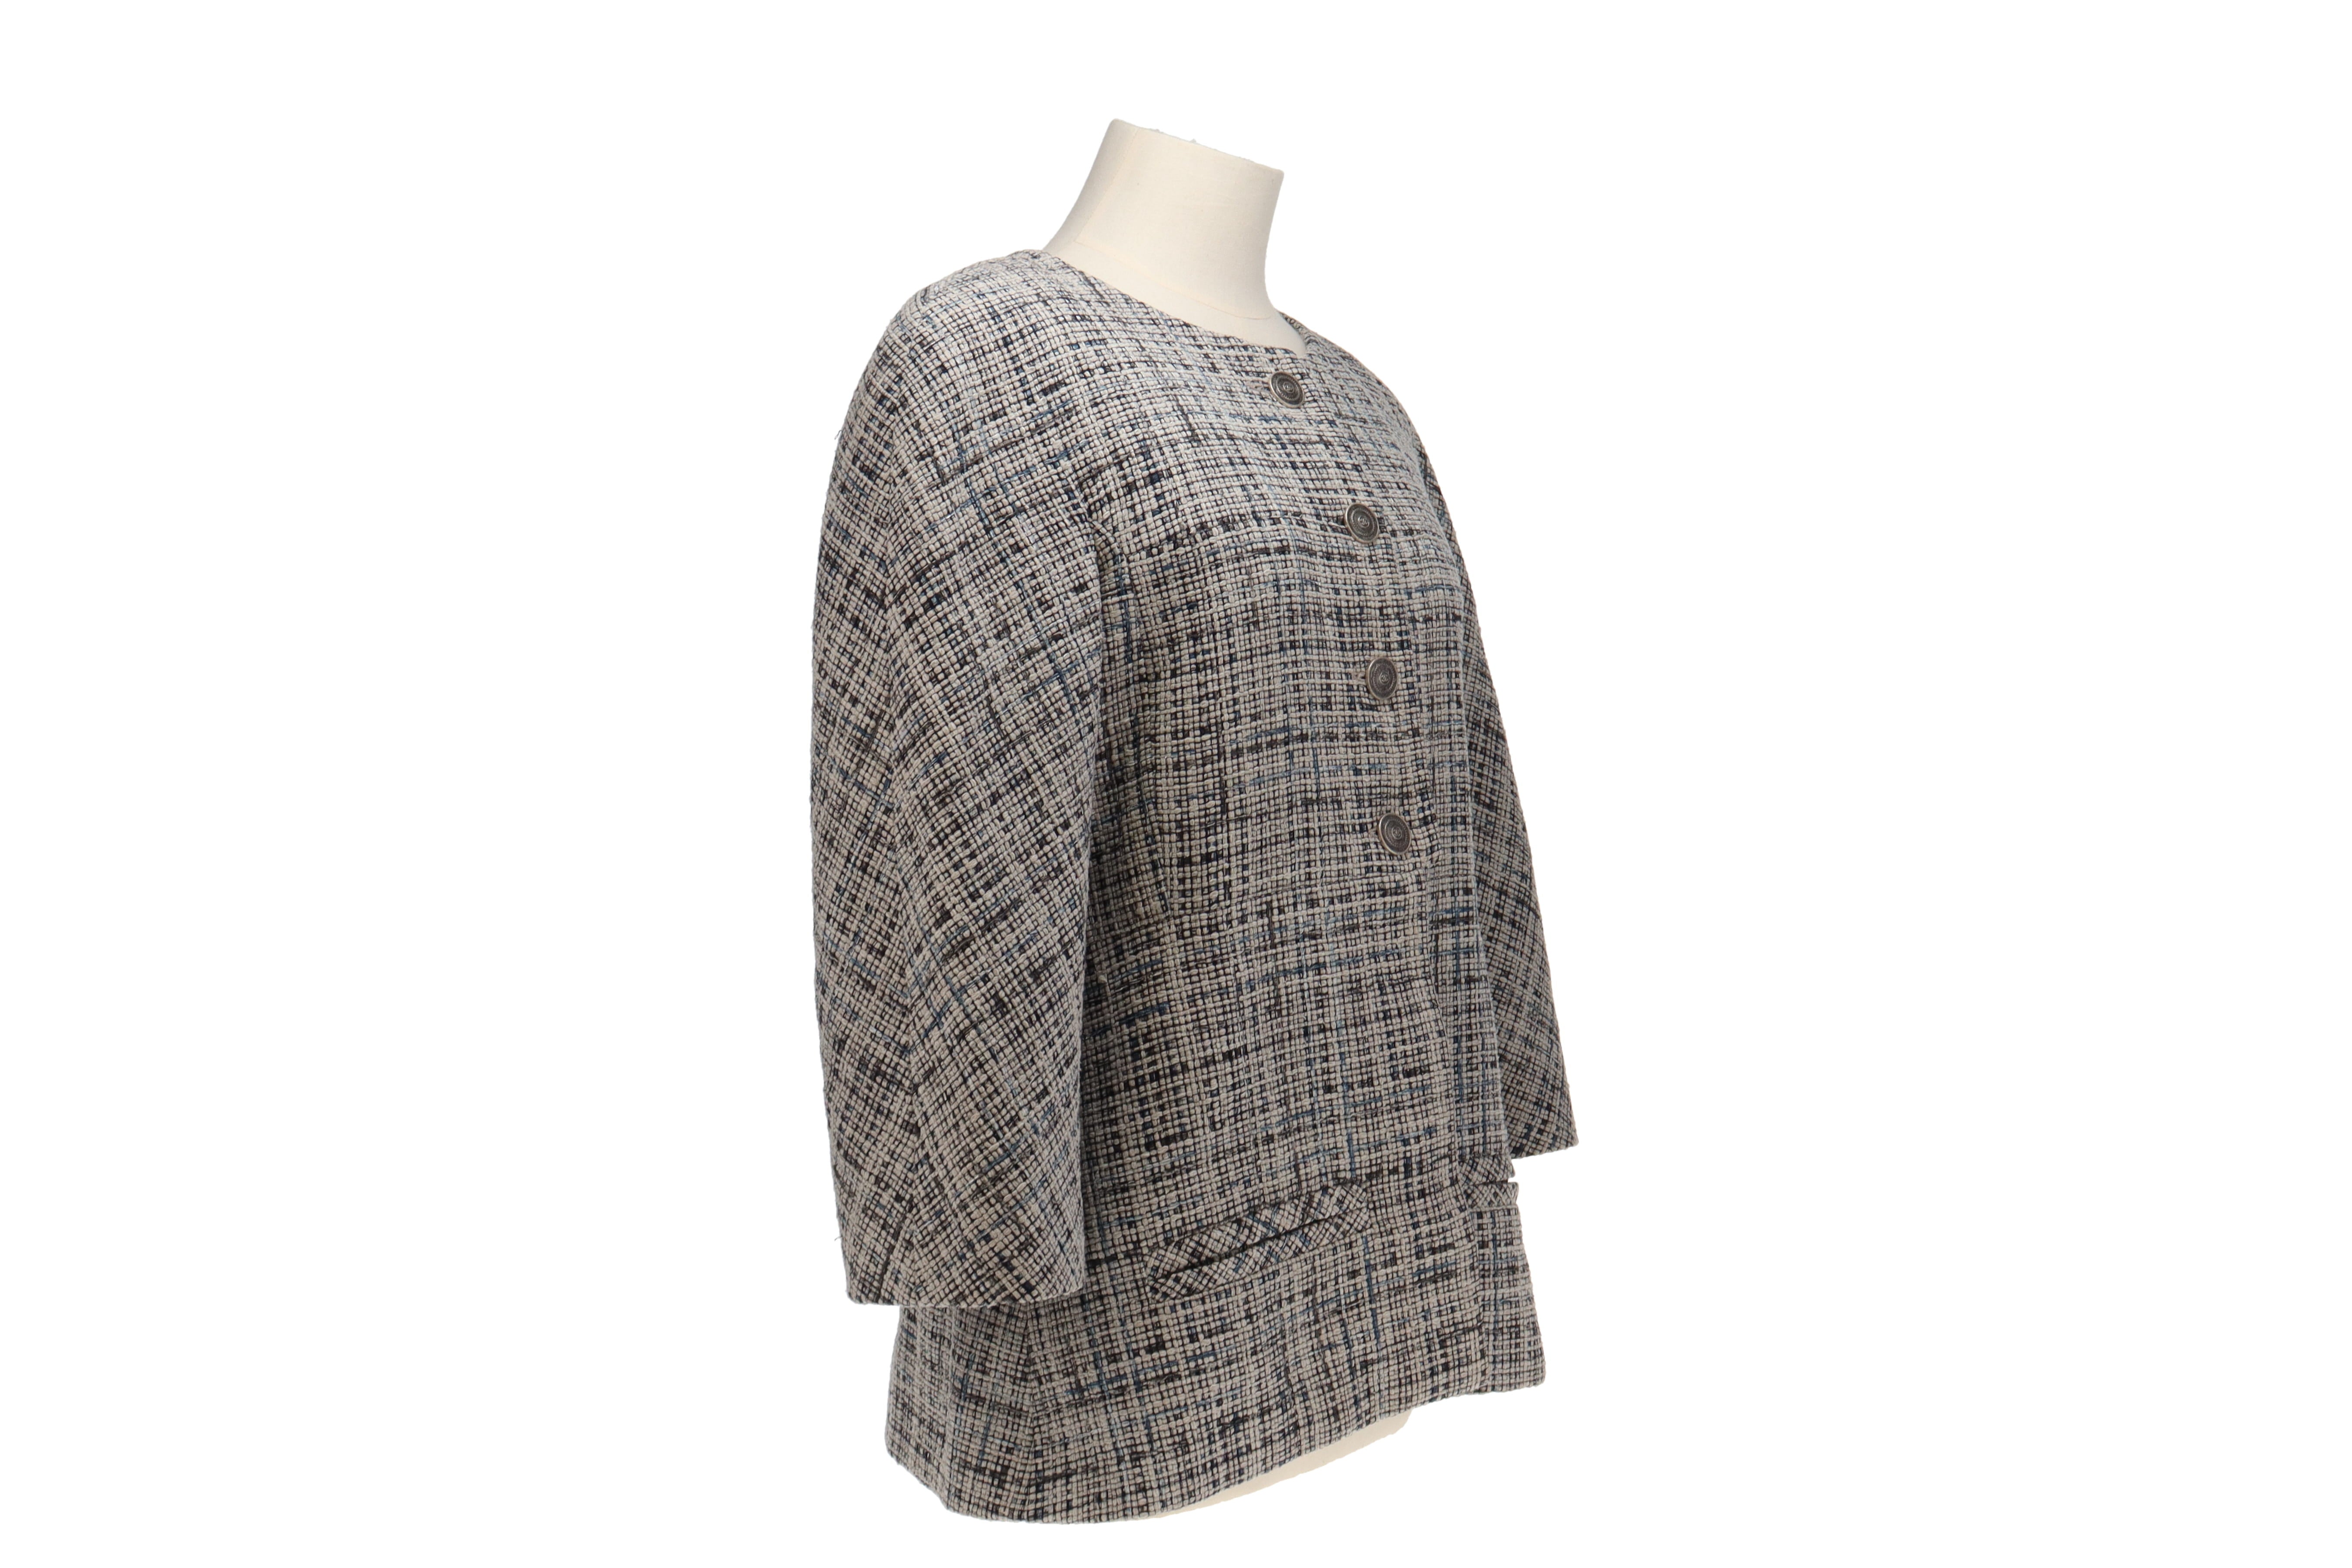 1960s Textured Wool Coat - Peter Pan Collar Coat - Mod Coat - Mad Men Coat  - Bracelet Sleeve Coat - Medium - Camel Coat - Swing Coat - Fall | Wool coat,  Coat, Collared coat